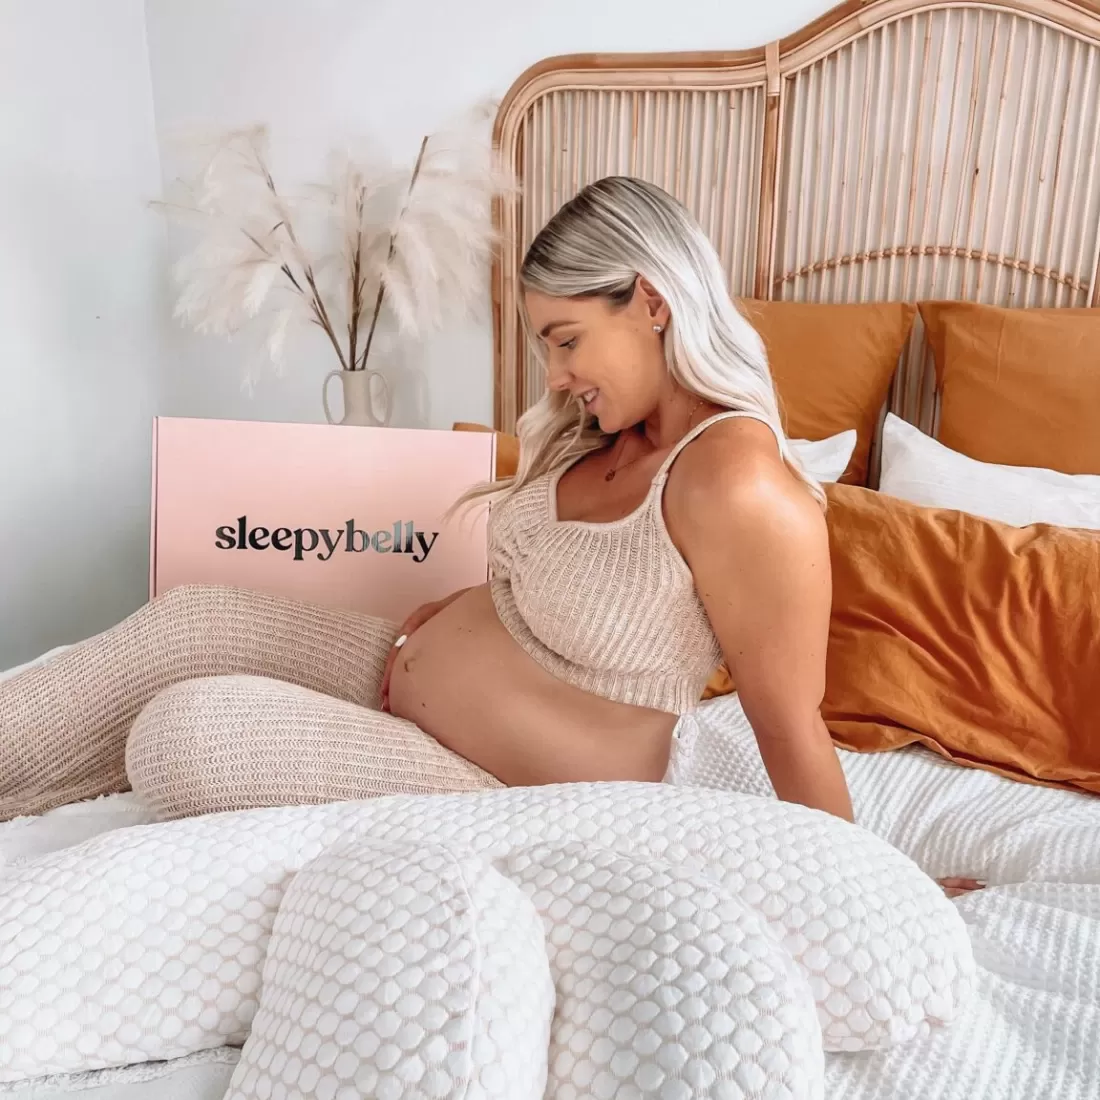 The Sleepybelly Pregnancy Pillow 139 95